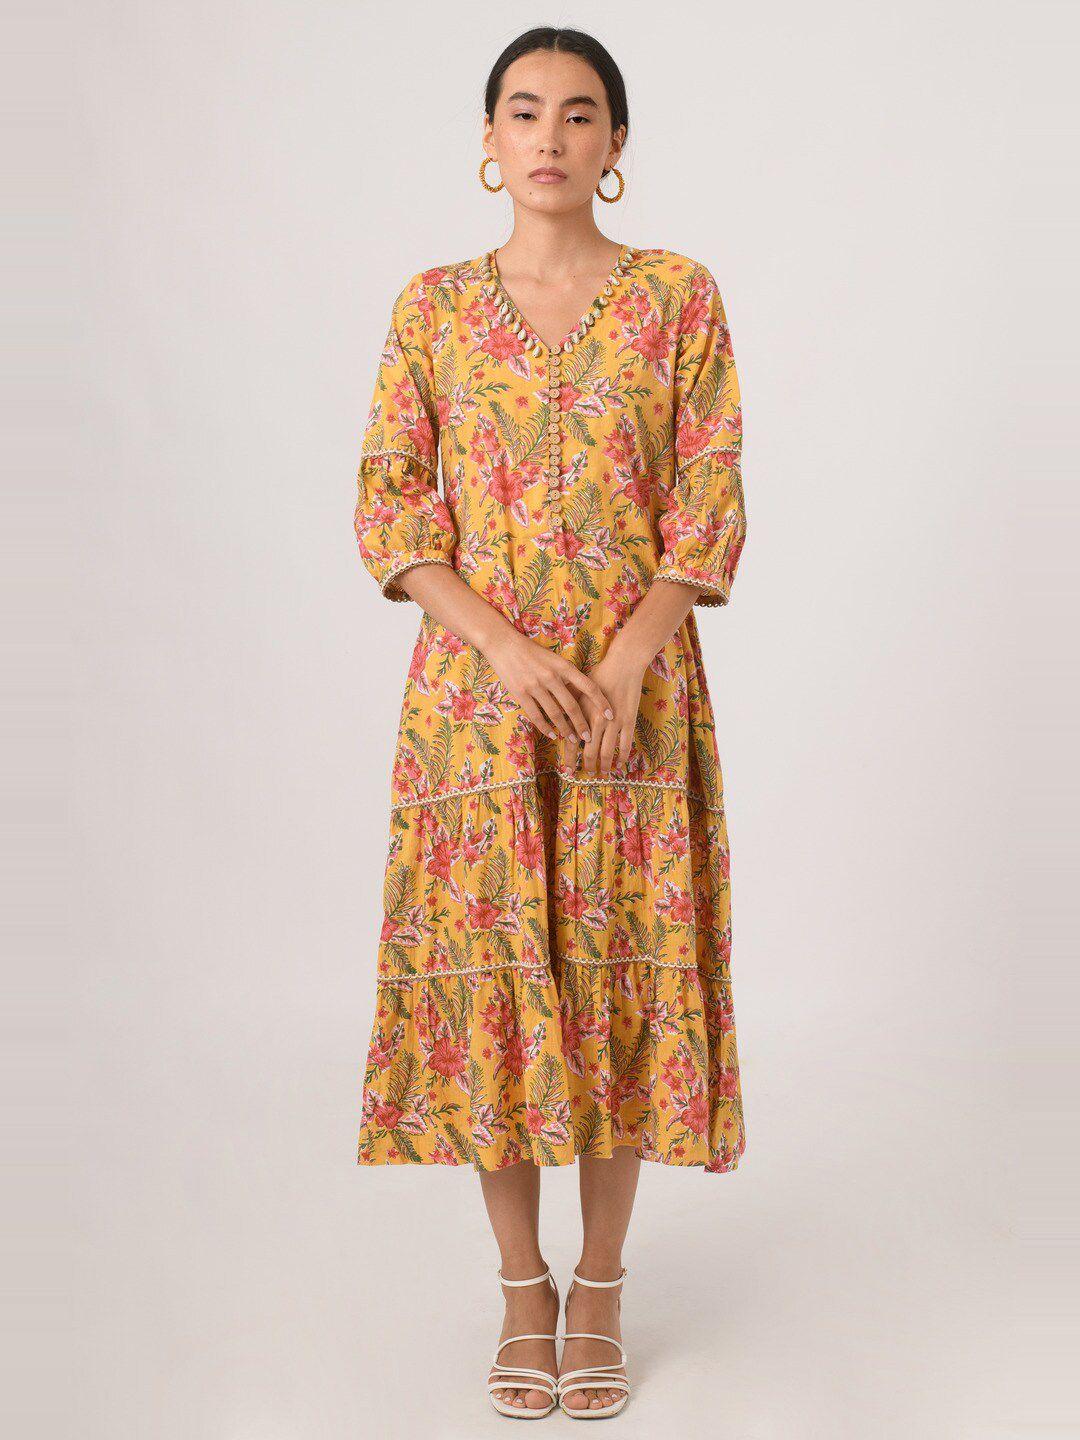 prakriti jaipur multicoloured dress